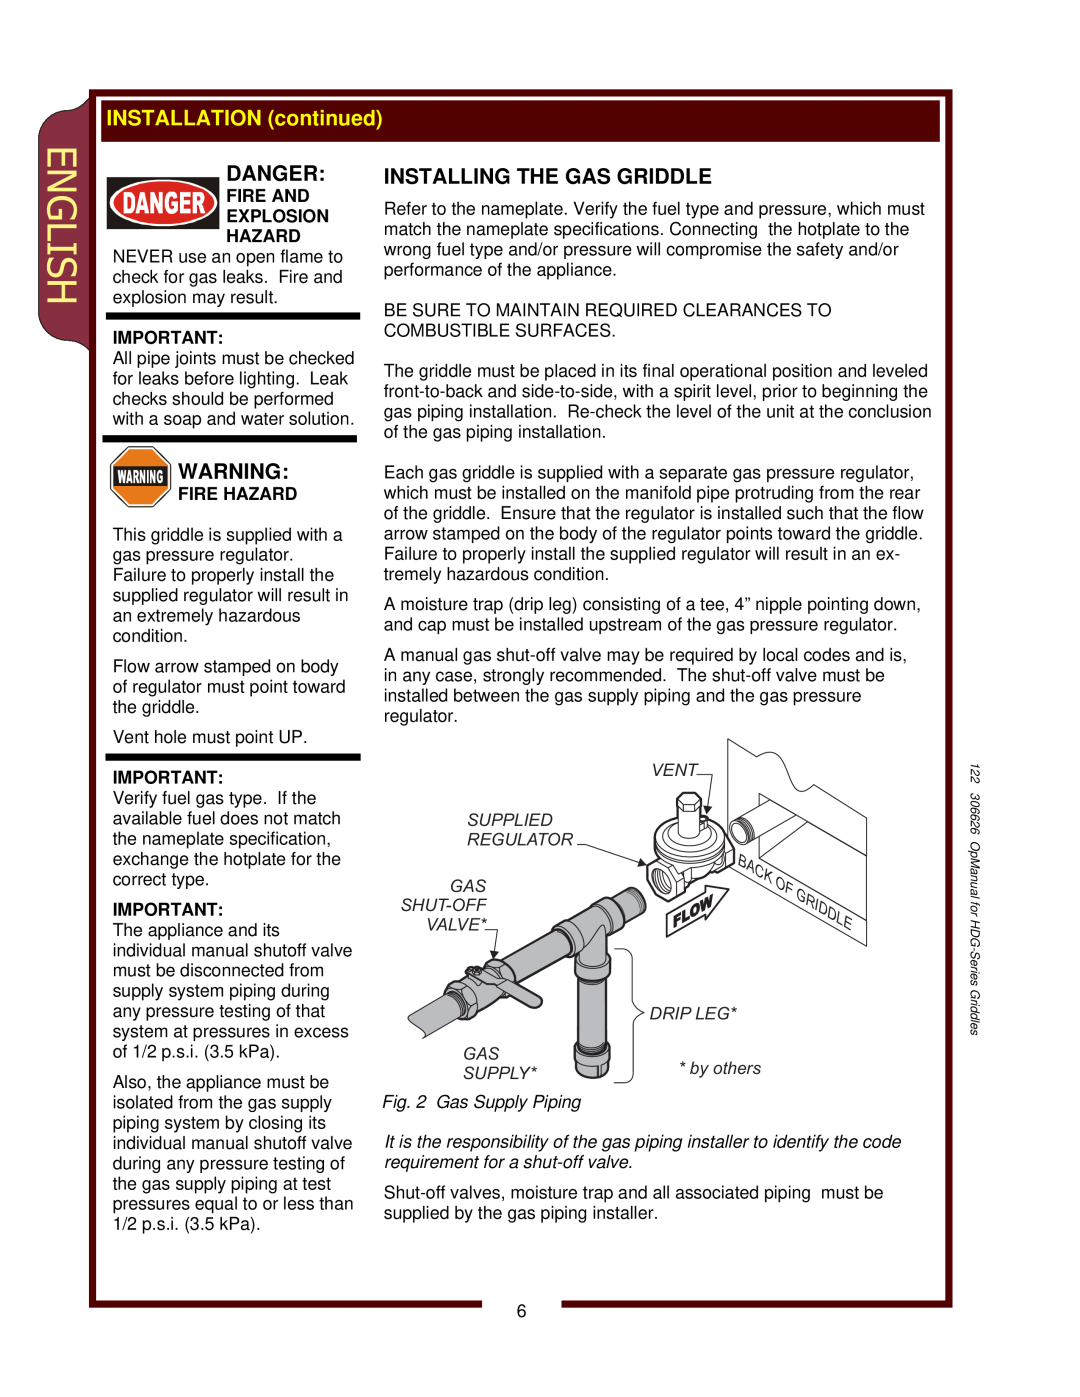 Wells HDG-2430G Installing The Gas Griddle, English, Danger, Fire And Explosion Hazard, Fire Hazard, Vent, Drip Leg 